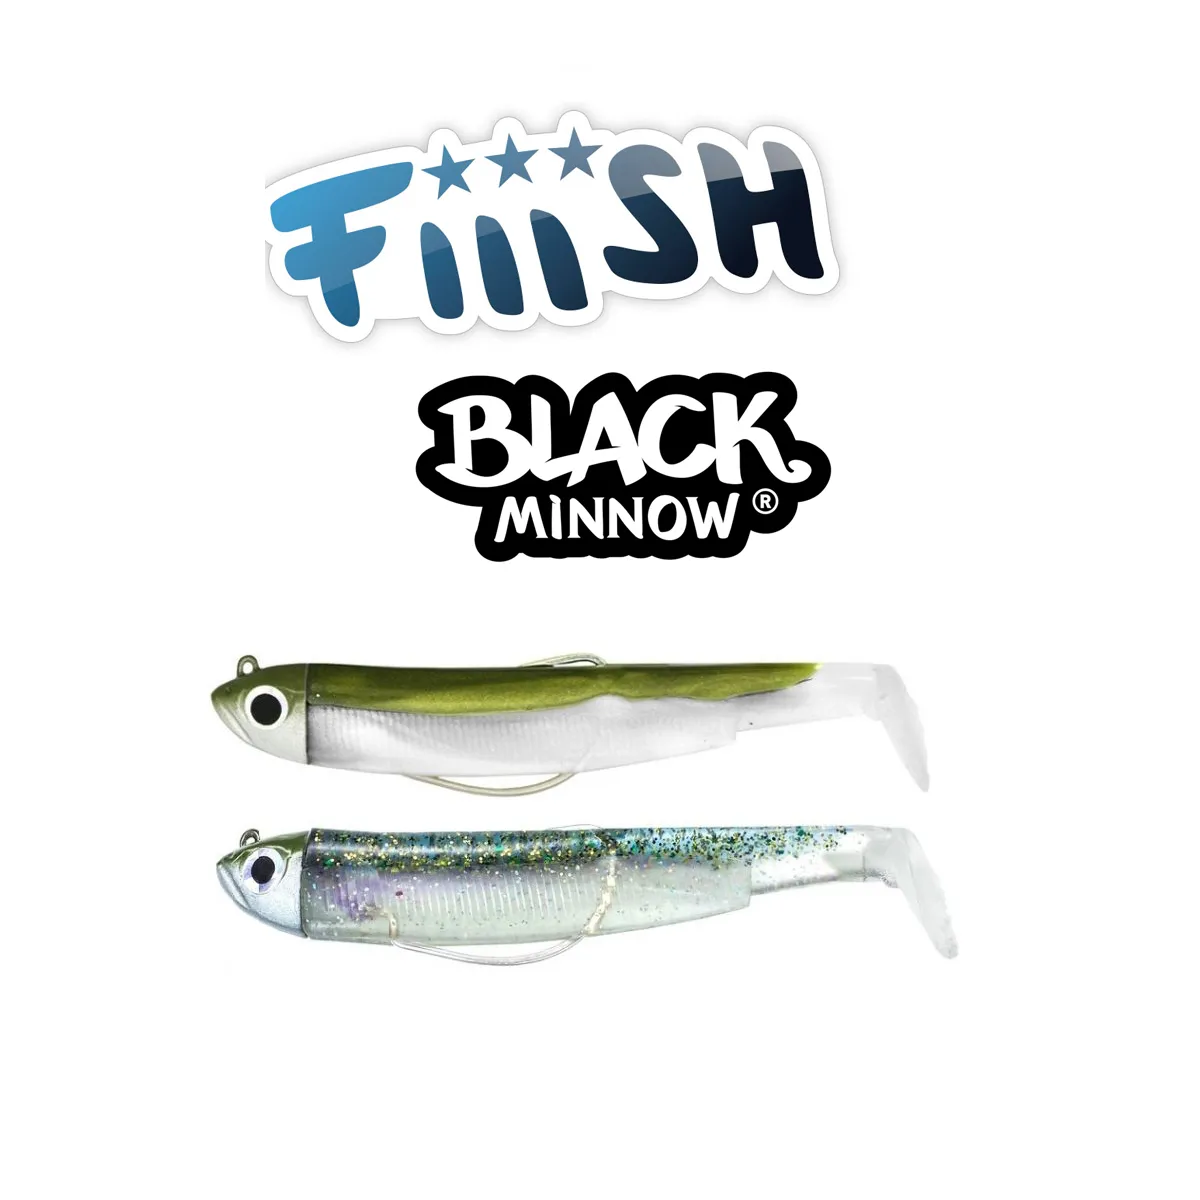 Fiiish Black Minnow No1 Double Combo - 7 cm, 3g 11